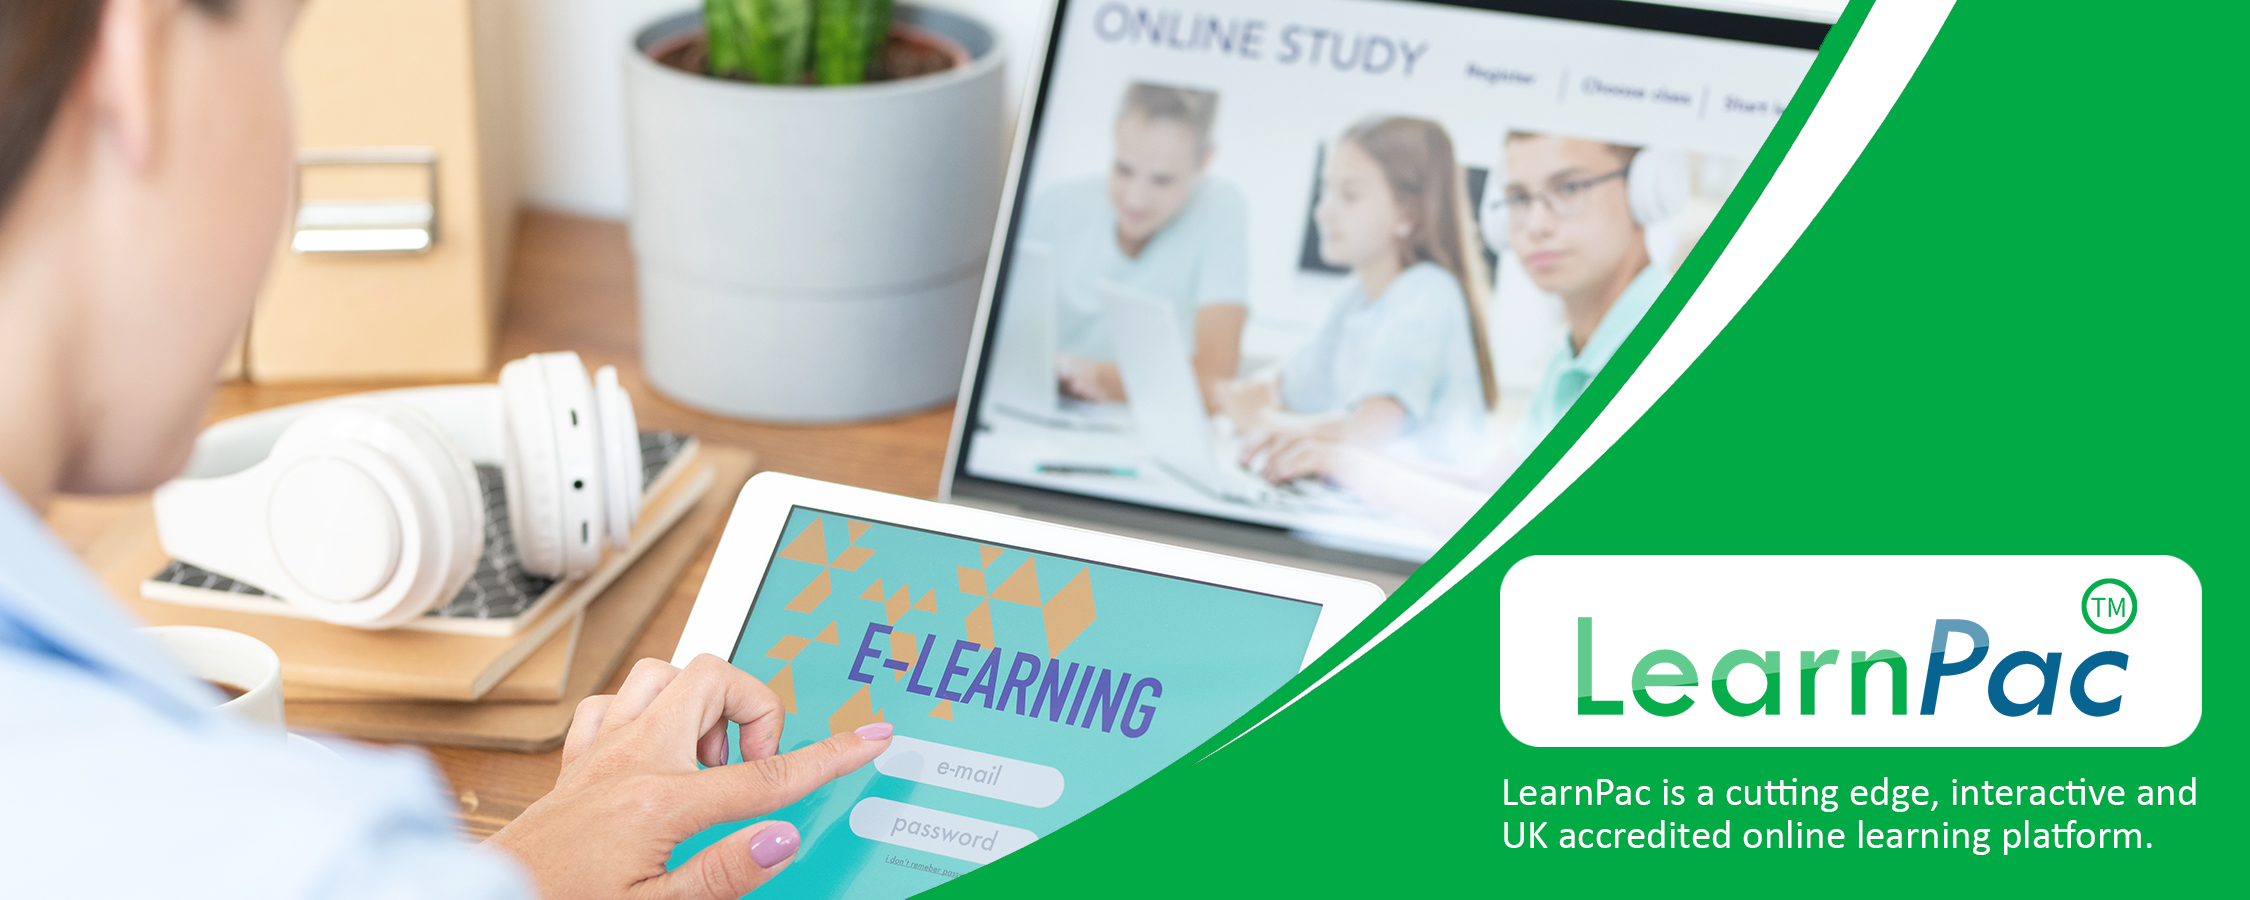 Creating a Great Webinar Training - Online Learning Courses - E-Learning Courses - LearnPac Systems UK - (2)